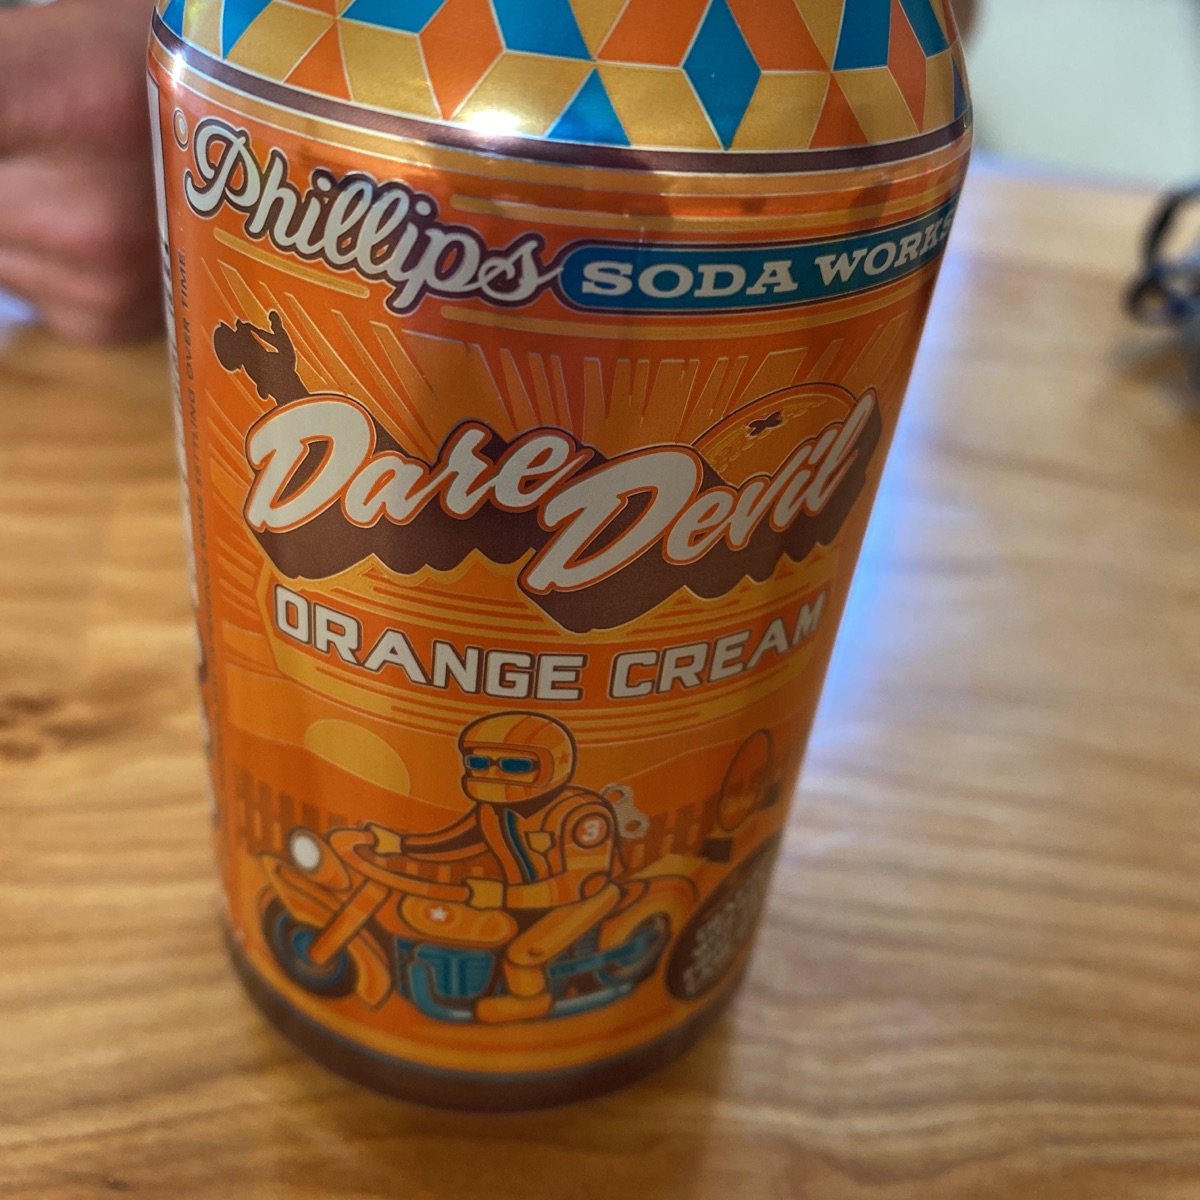 Phillips Soda Works Dare Devil Orange Cream Reviews | abillion